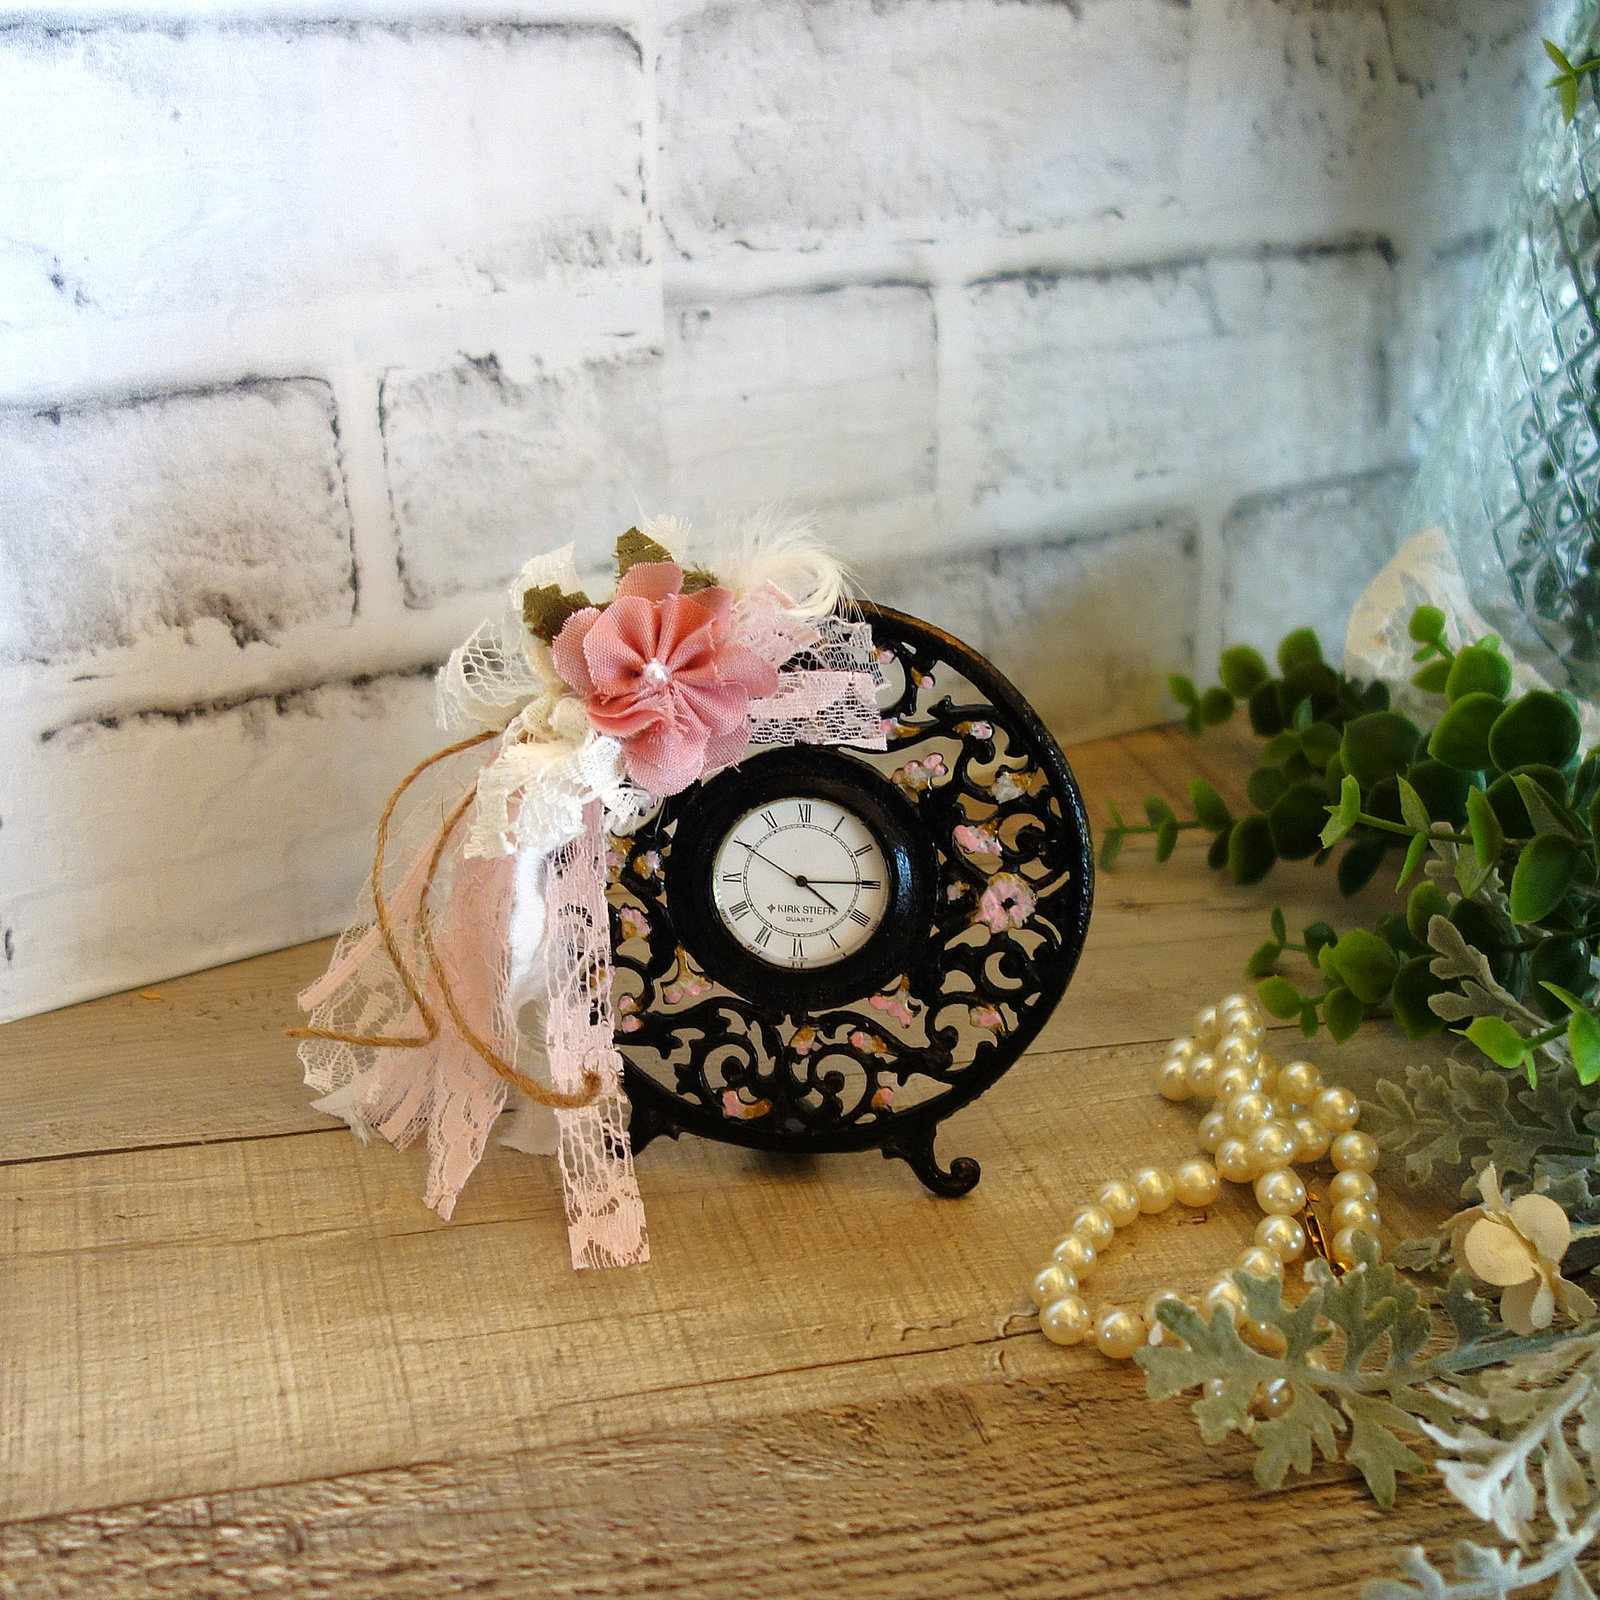 Shabby Chic Romantic Clock Kirk Stieff Quartz French Chic Pink and Black Clock - $42.00